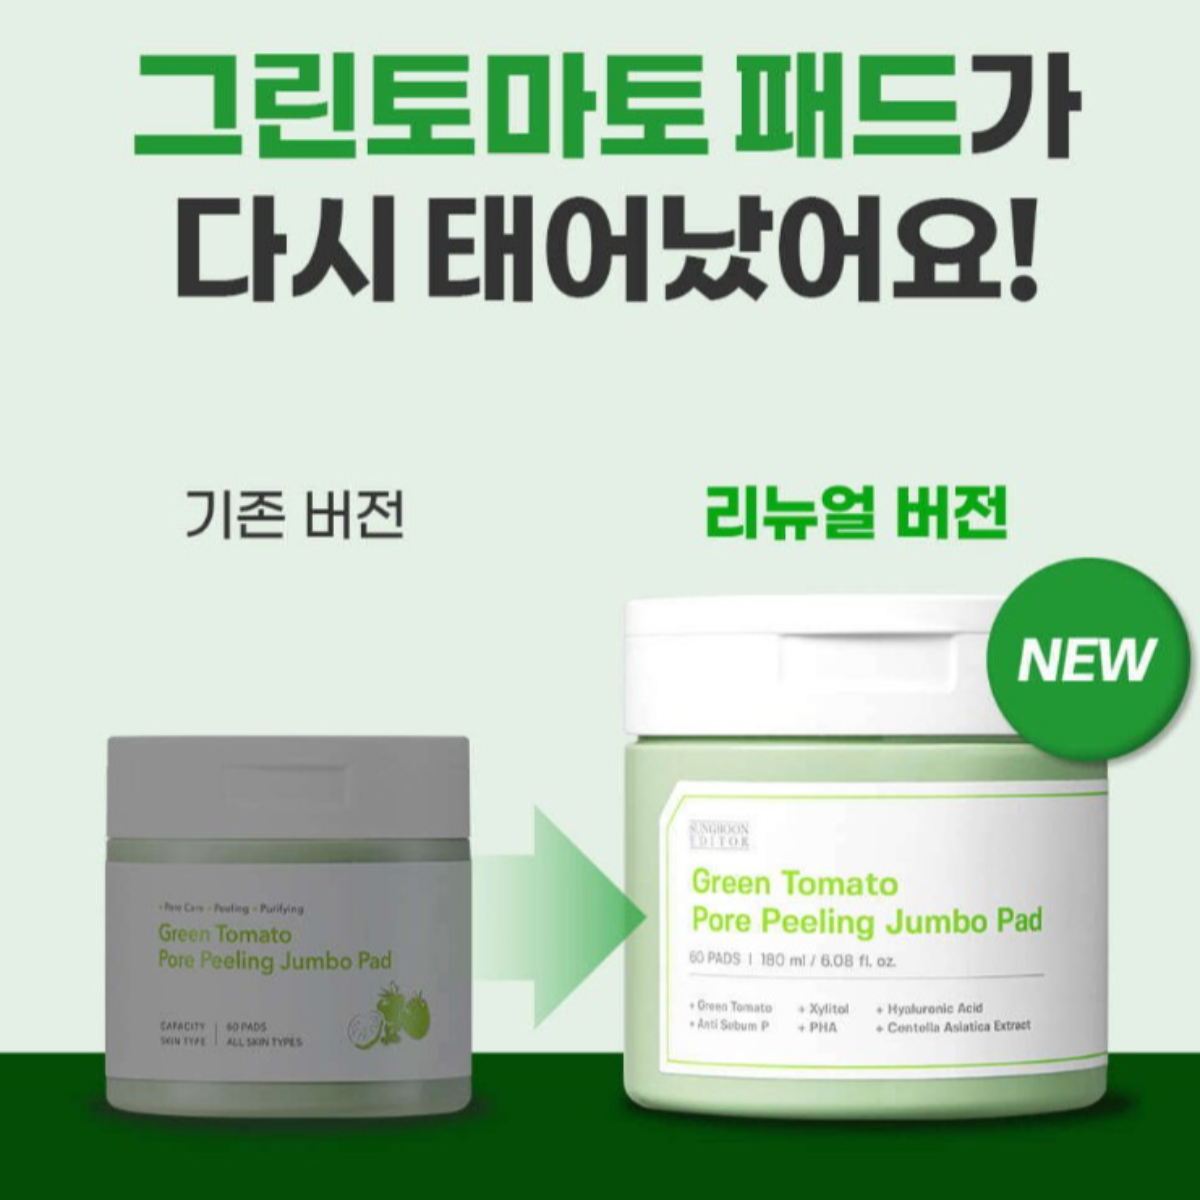 SUNGBOON EDITOR Green Tomato Pore Peeling Jumbo Pat 60 sheets/bottle Hypoallergenic pore tightening anti-sebum skin soothing moisturizing / from Seoul, Korea